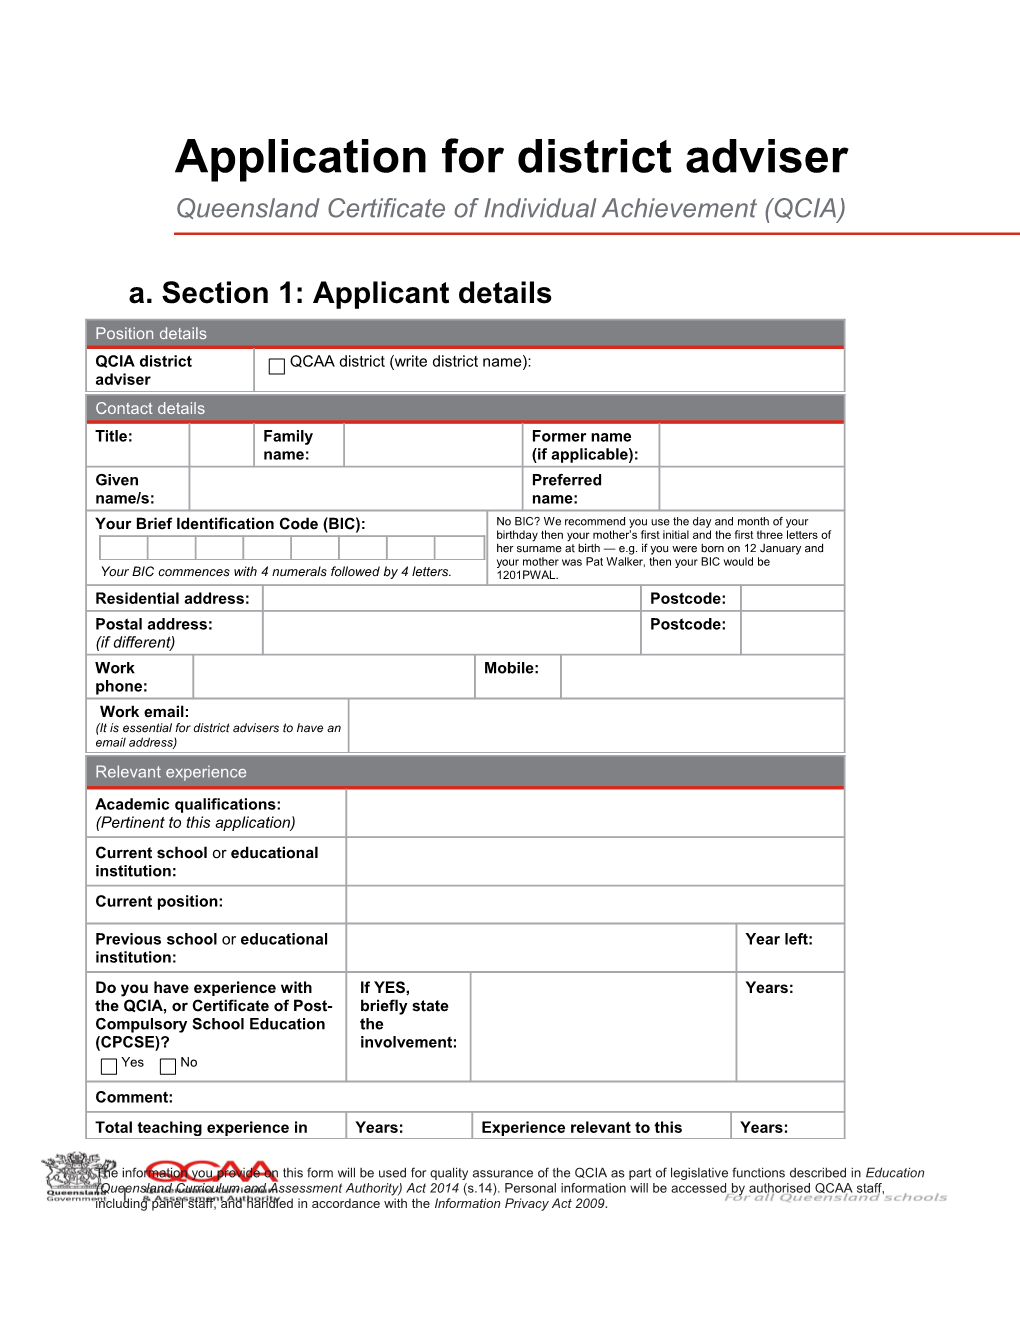 Application for District Adviser